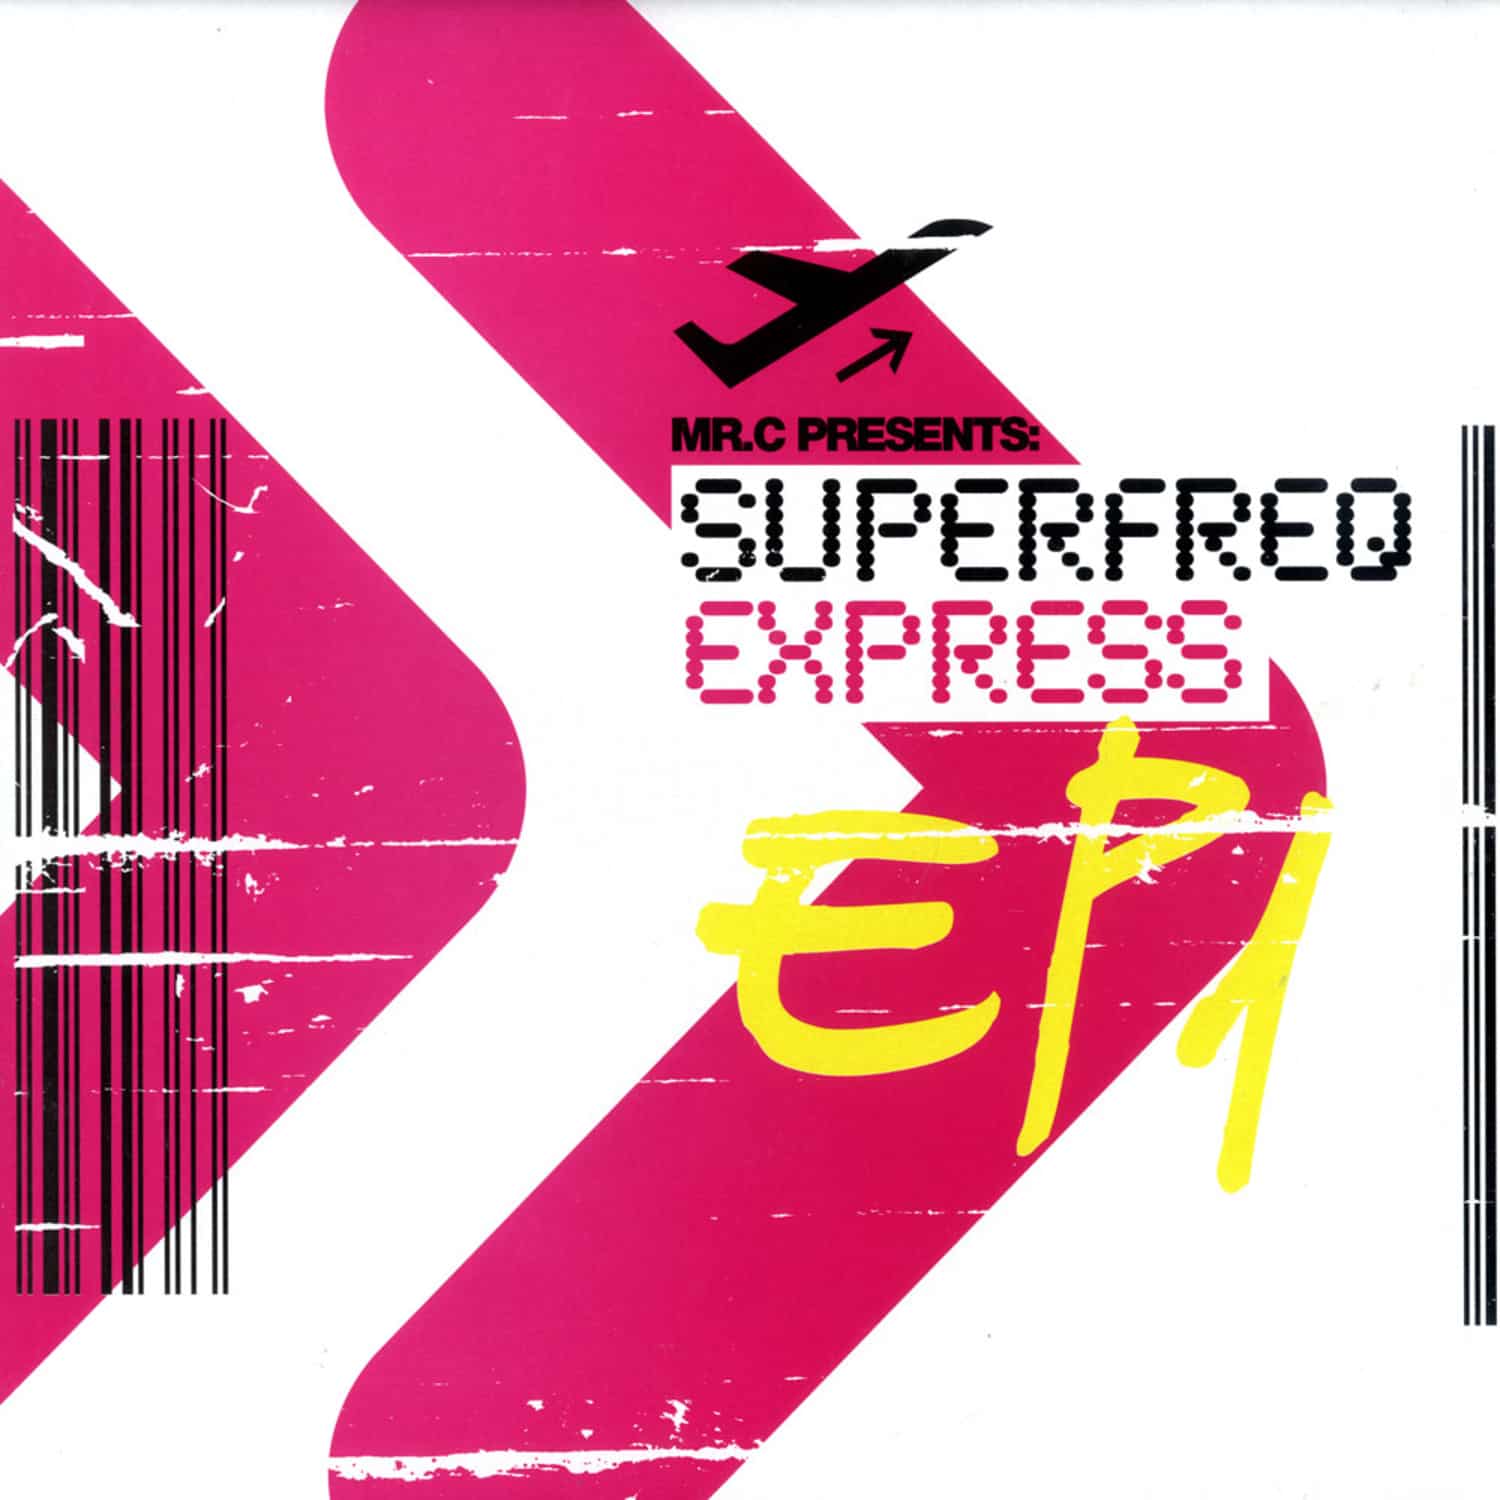 V/A - SUPERFREQ EXPRESS EP1